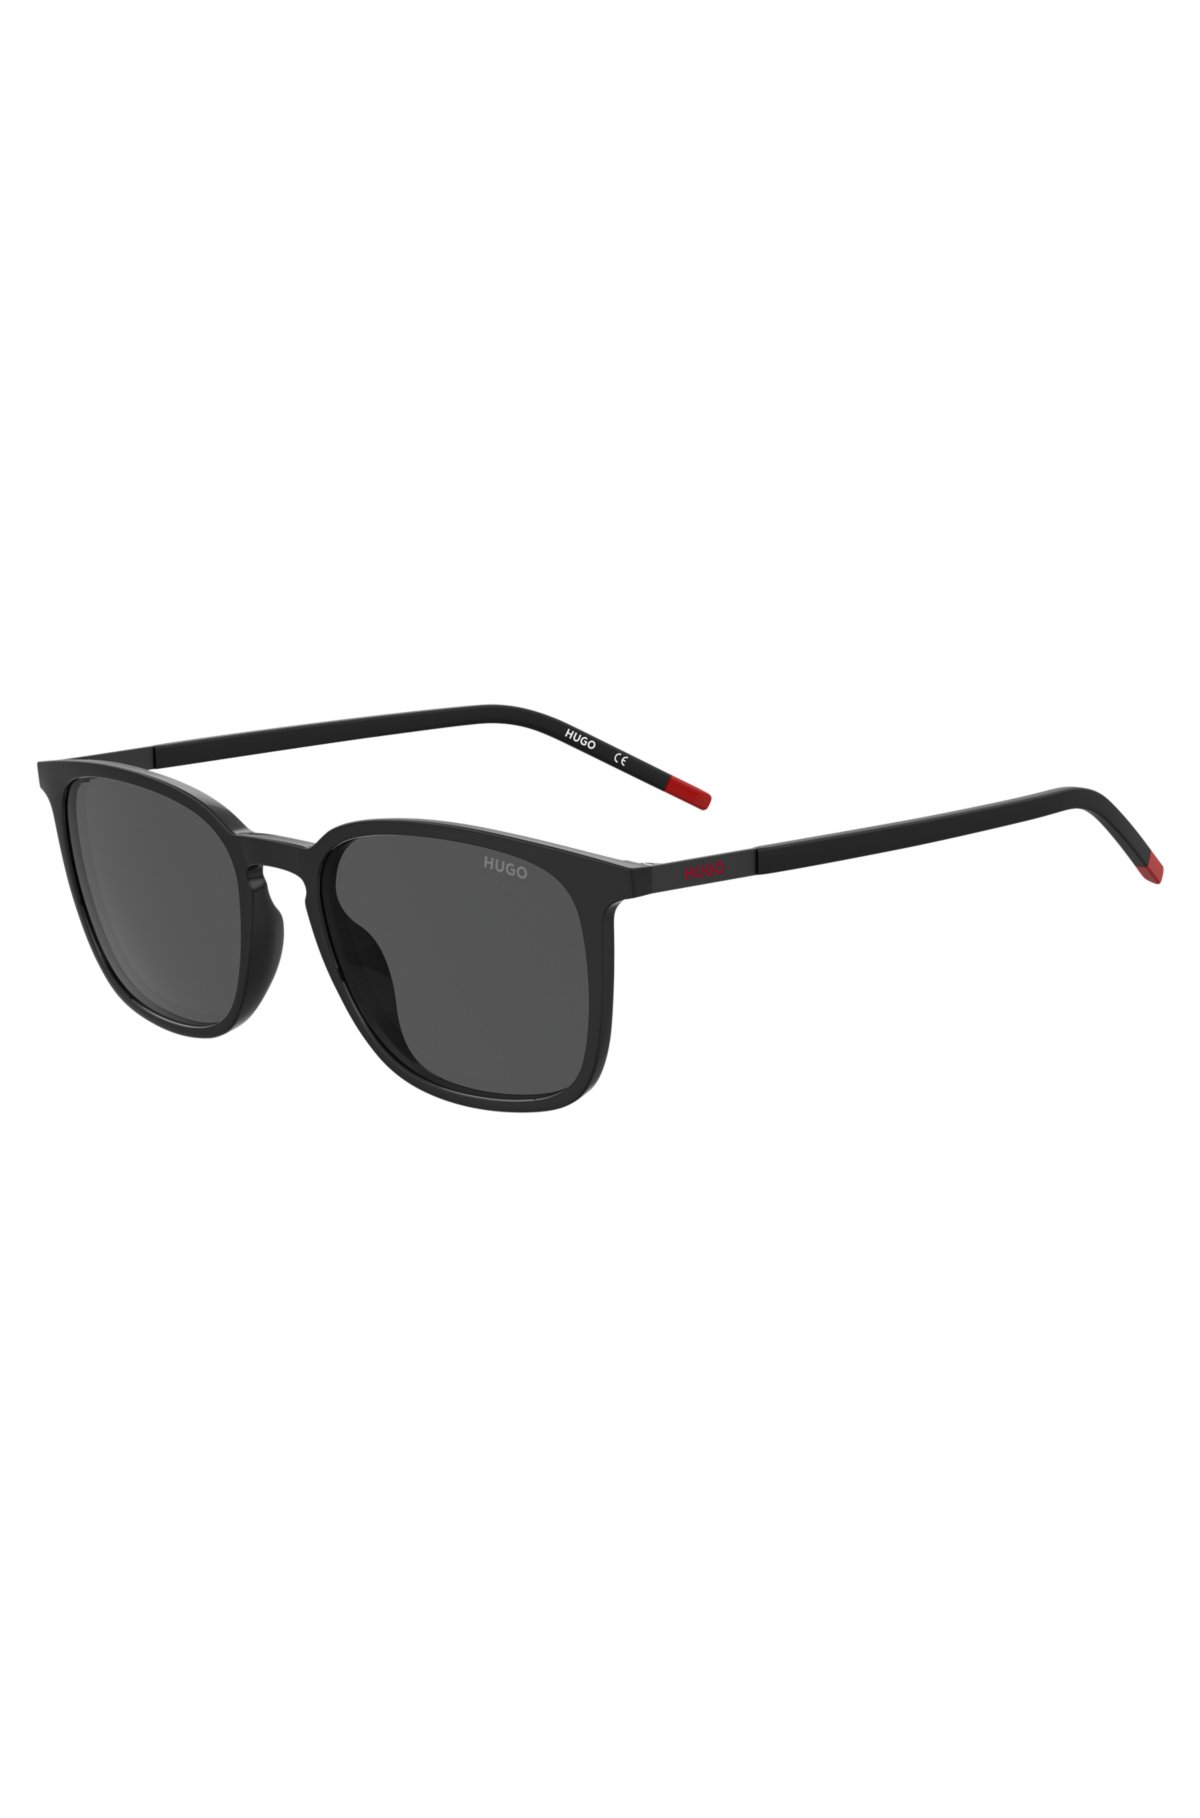 HUGO - Black sunglasses with signature-red details